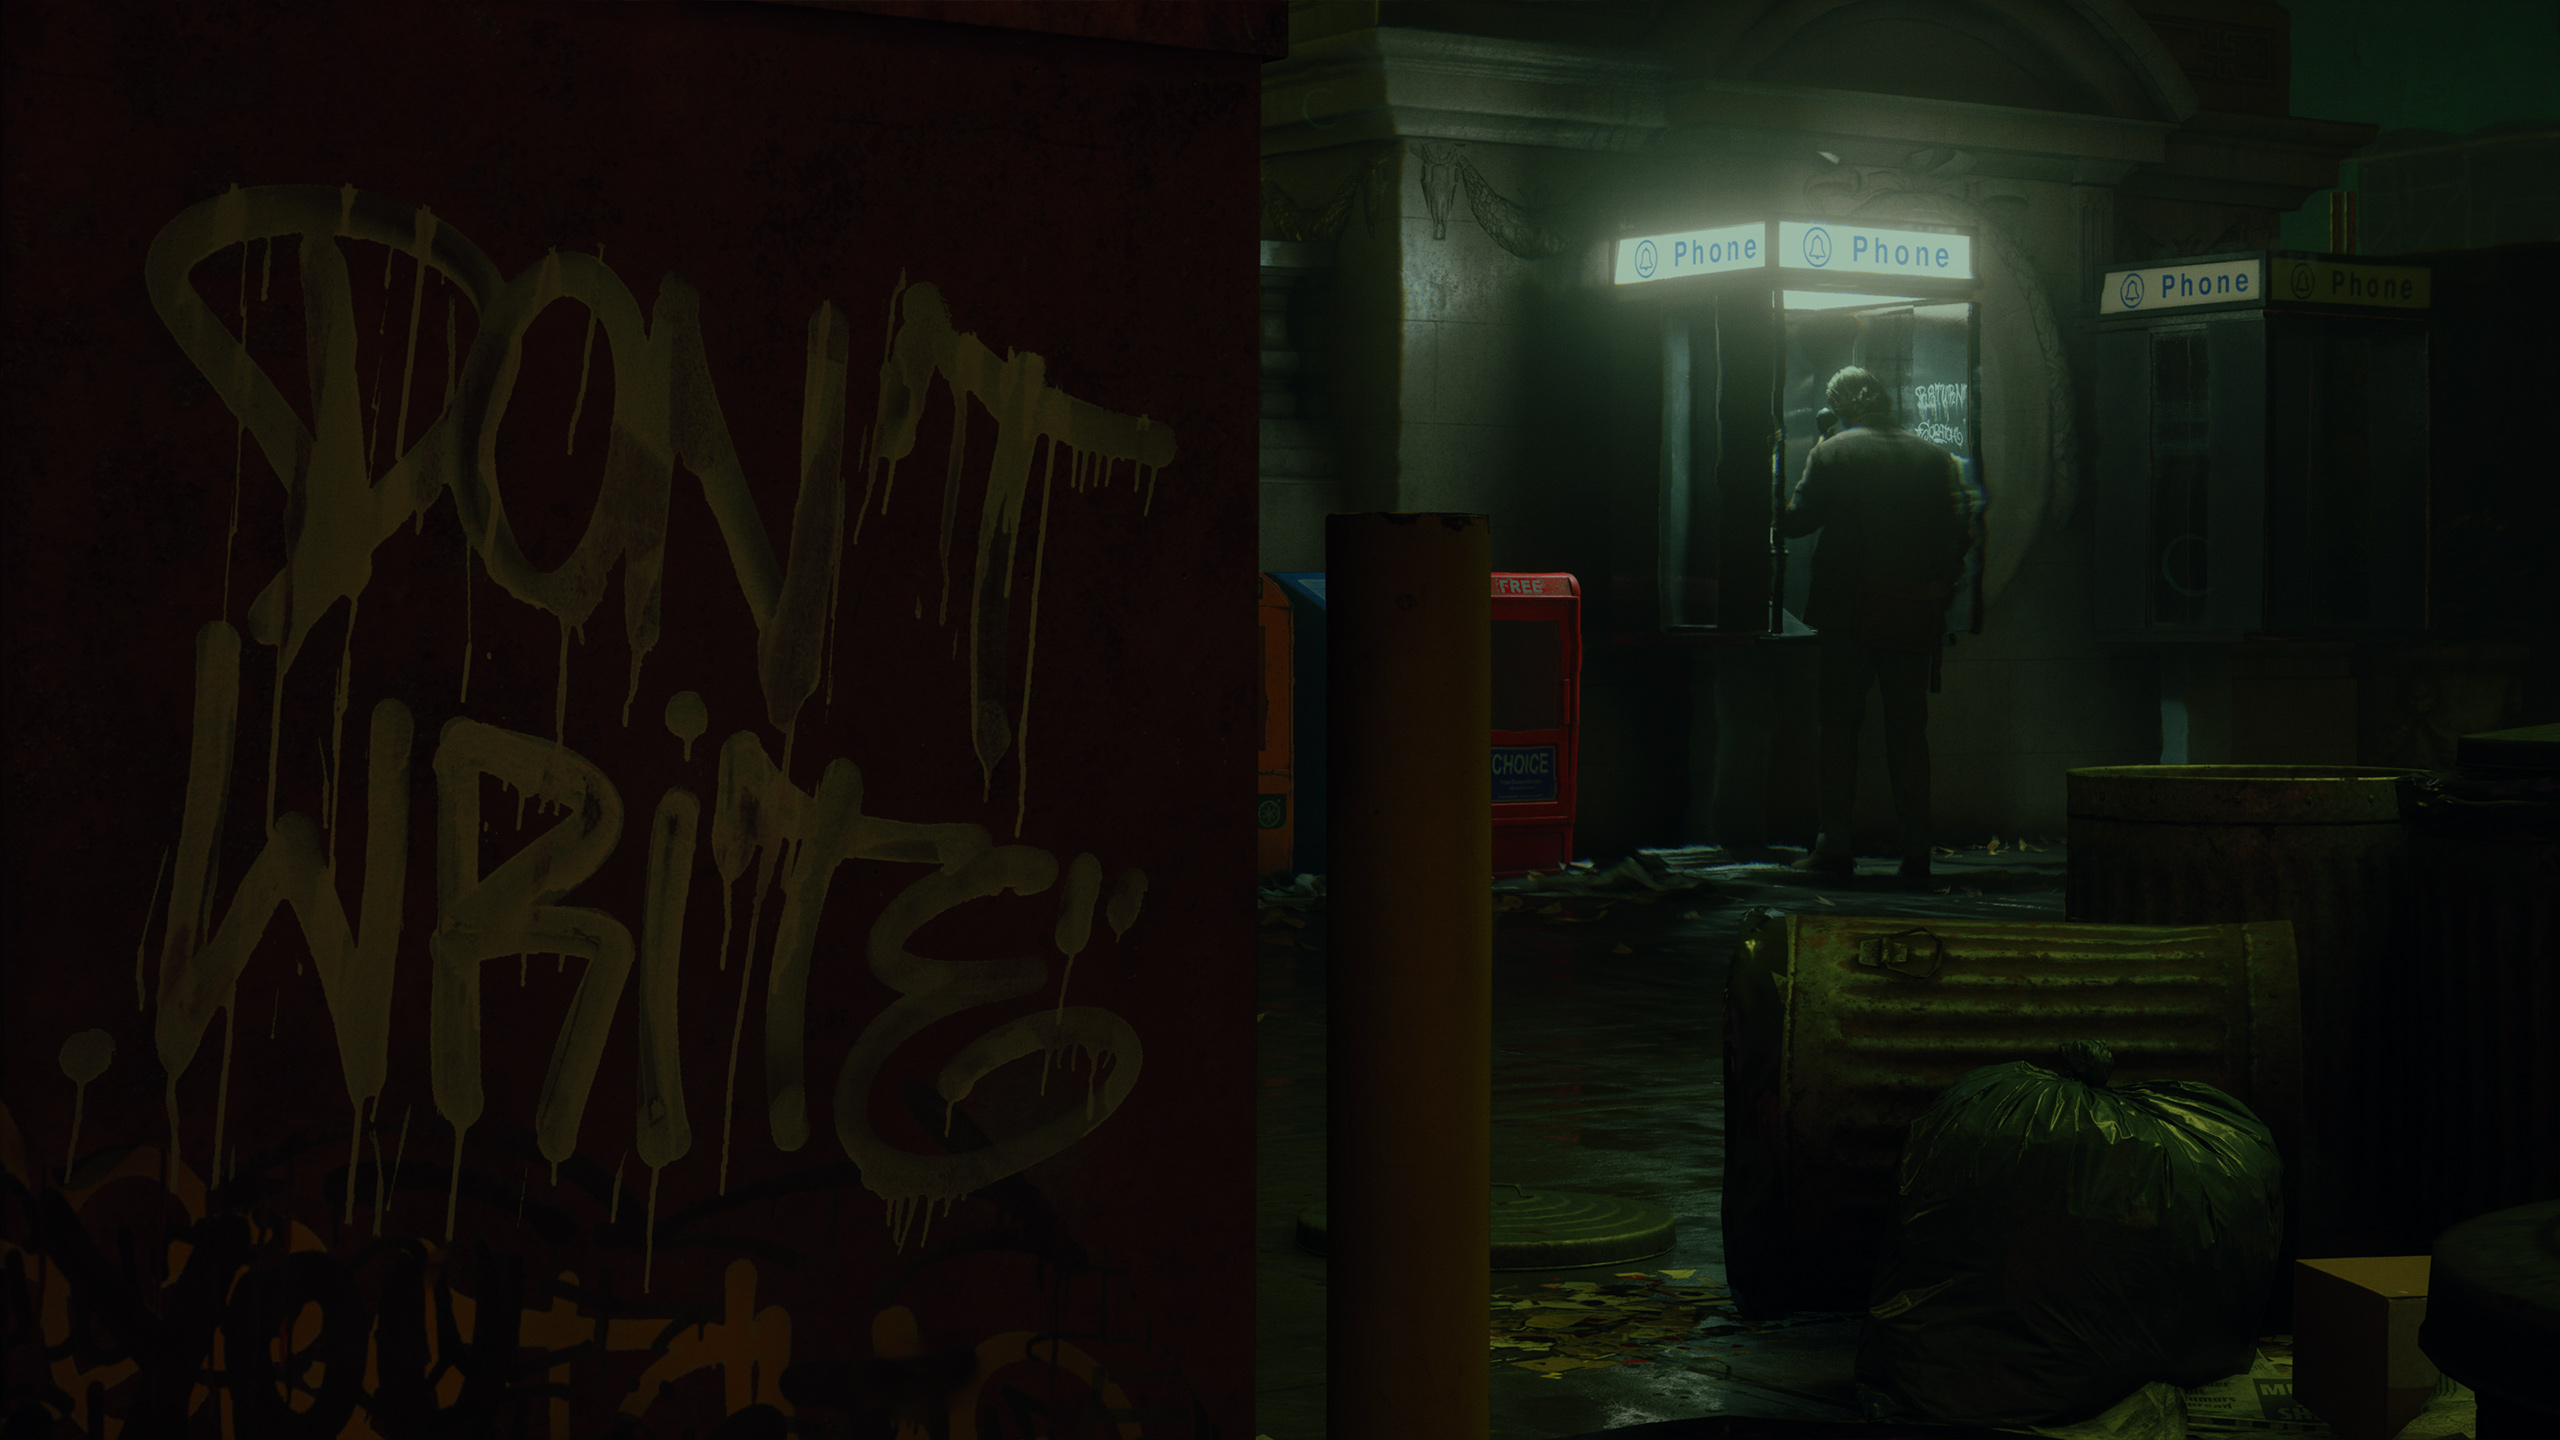 Alan Wake 2 HD Wallpaper: Mysterious Figure in a Dark Room with Graffiti.